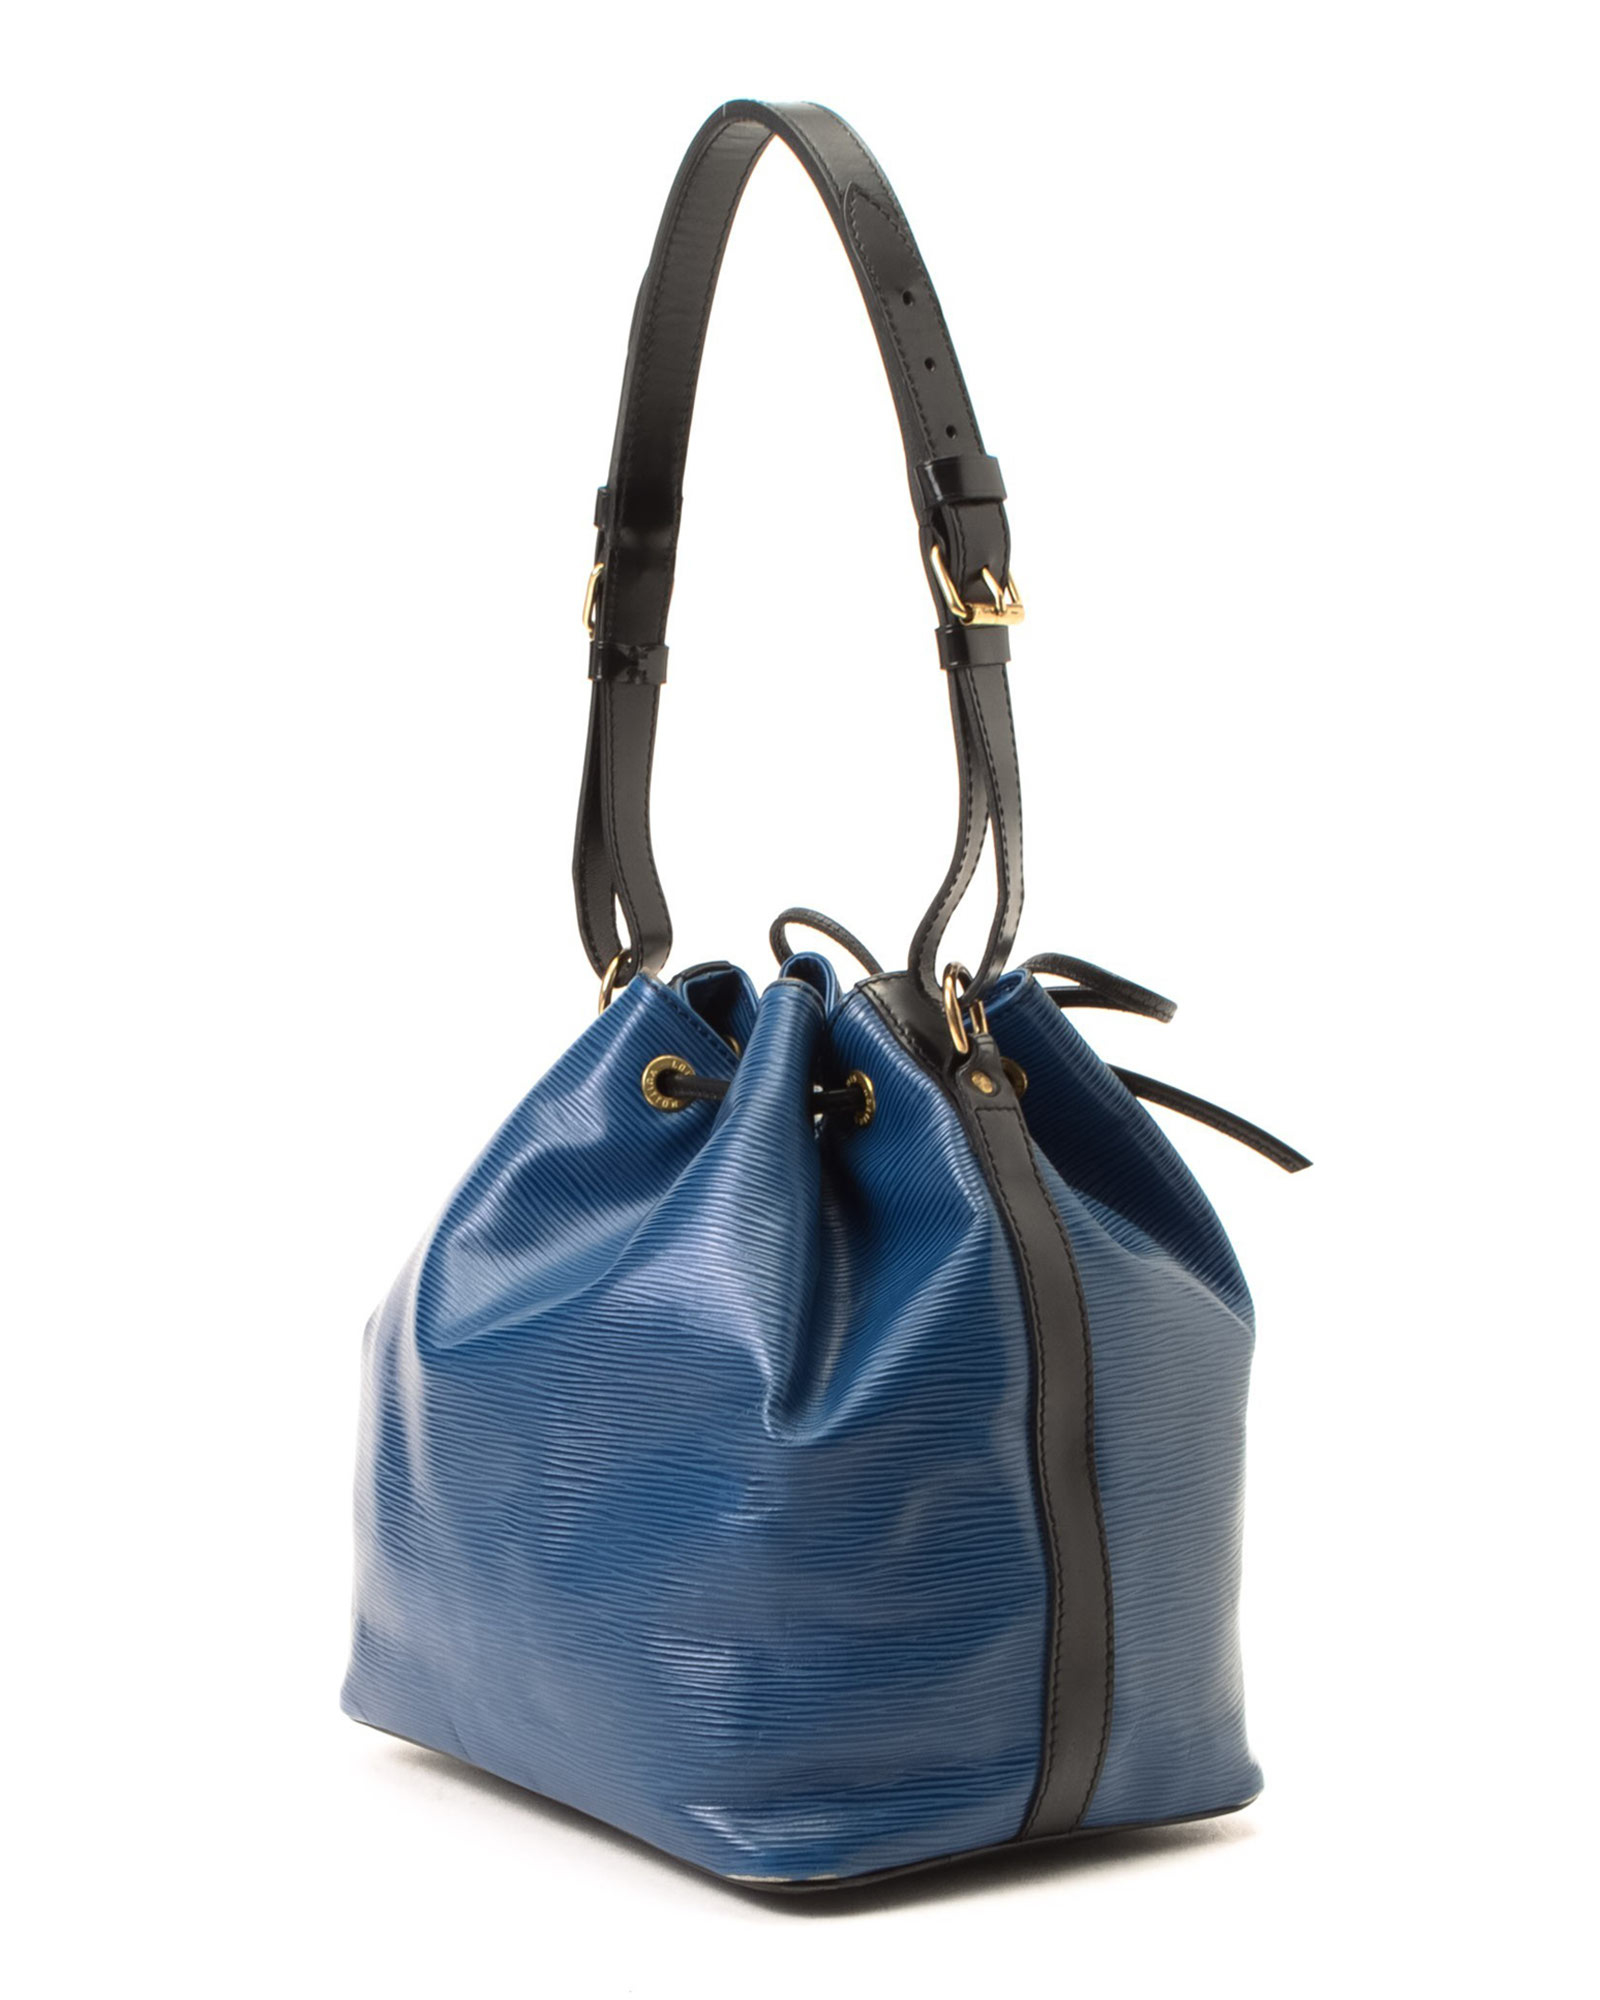 Louis Vuitton Backpack Black And Blue | Wydział Cybernetyki